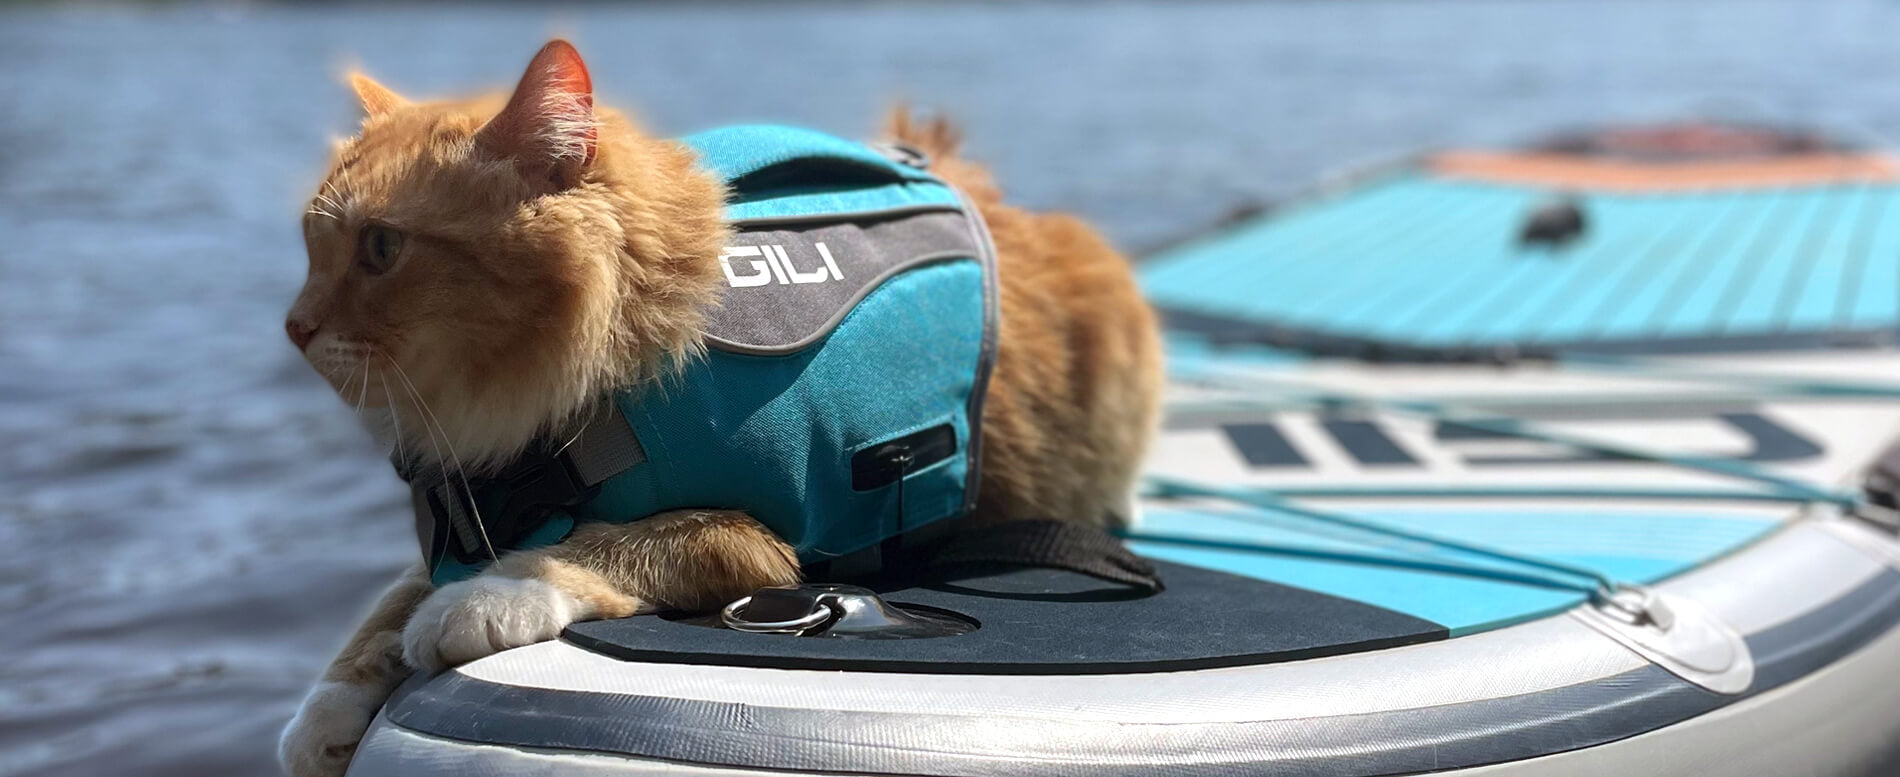 GILI pet life jacket on a cat